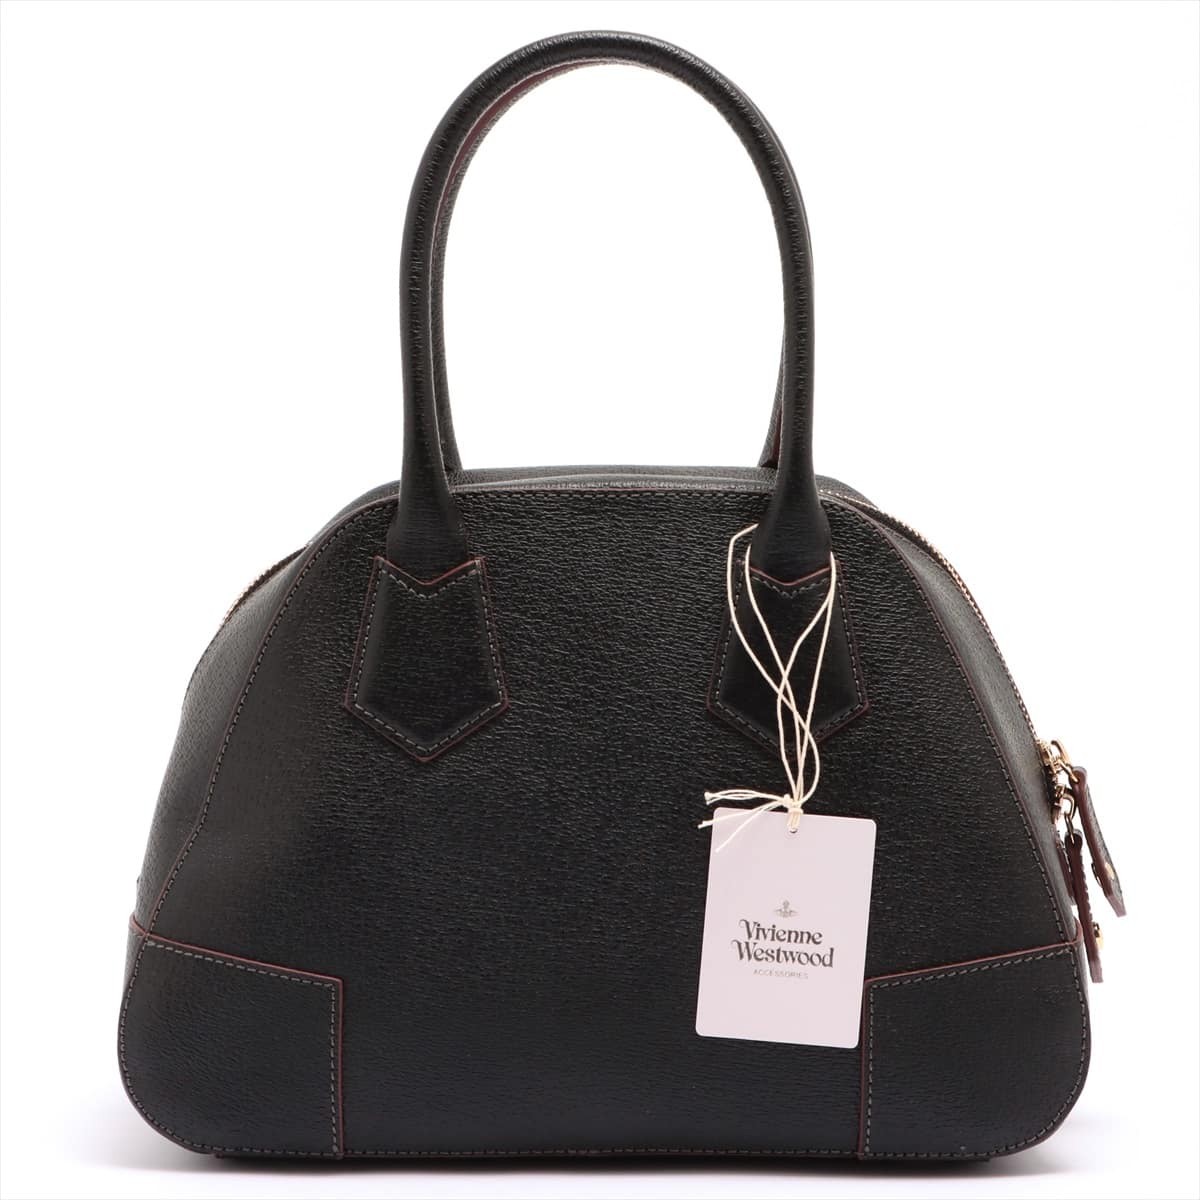 Vivienne Westwood Leather Hand bag Black